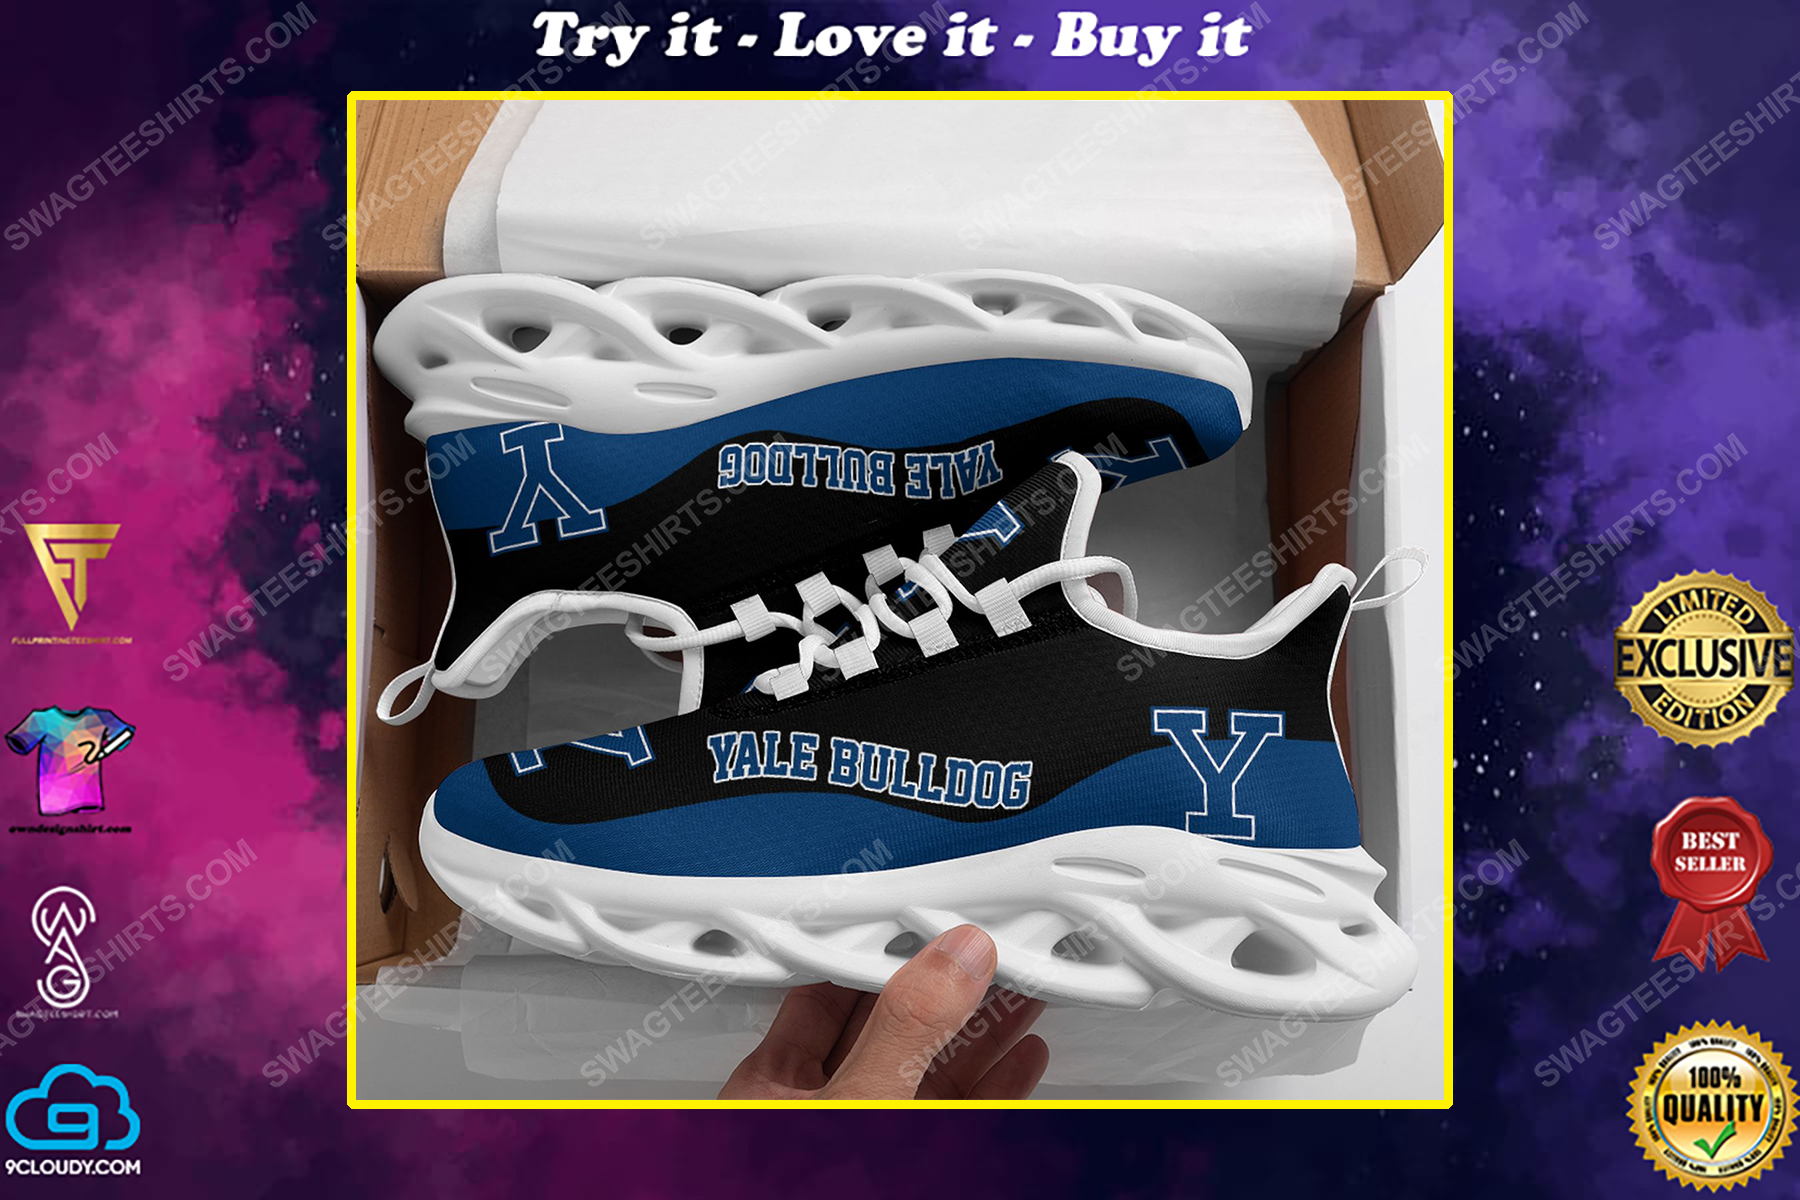 Yale bulldogs football team max soul shoes